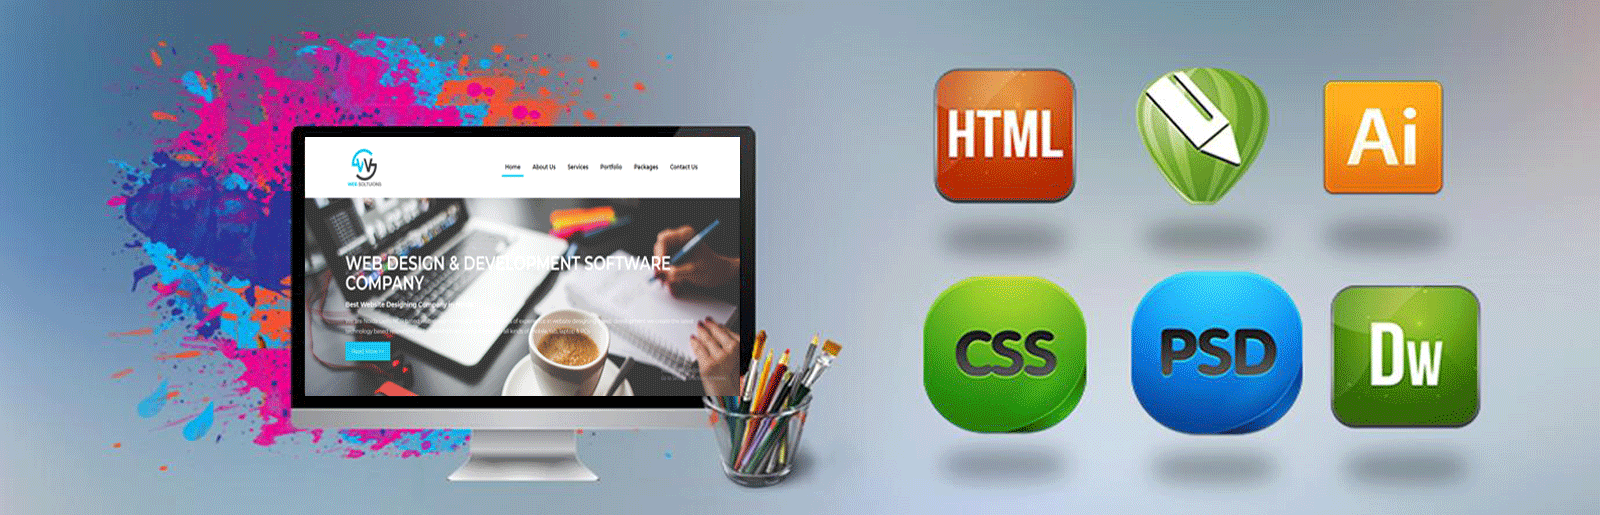 webdesign-banner